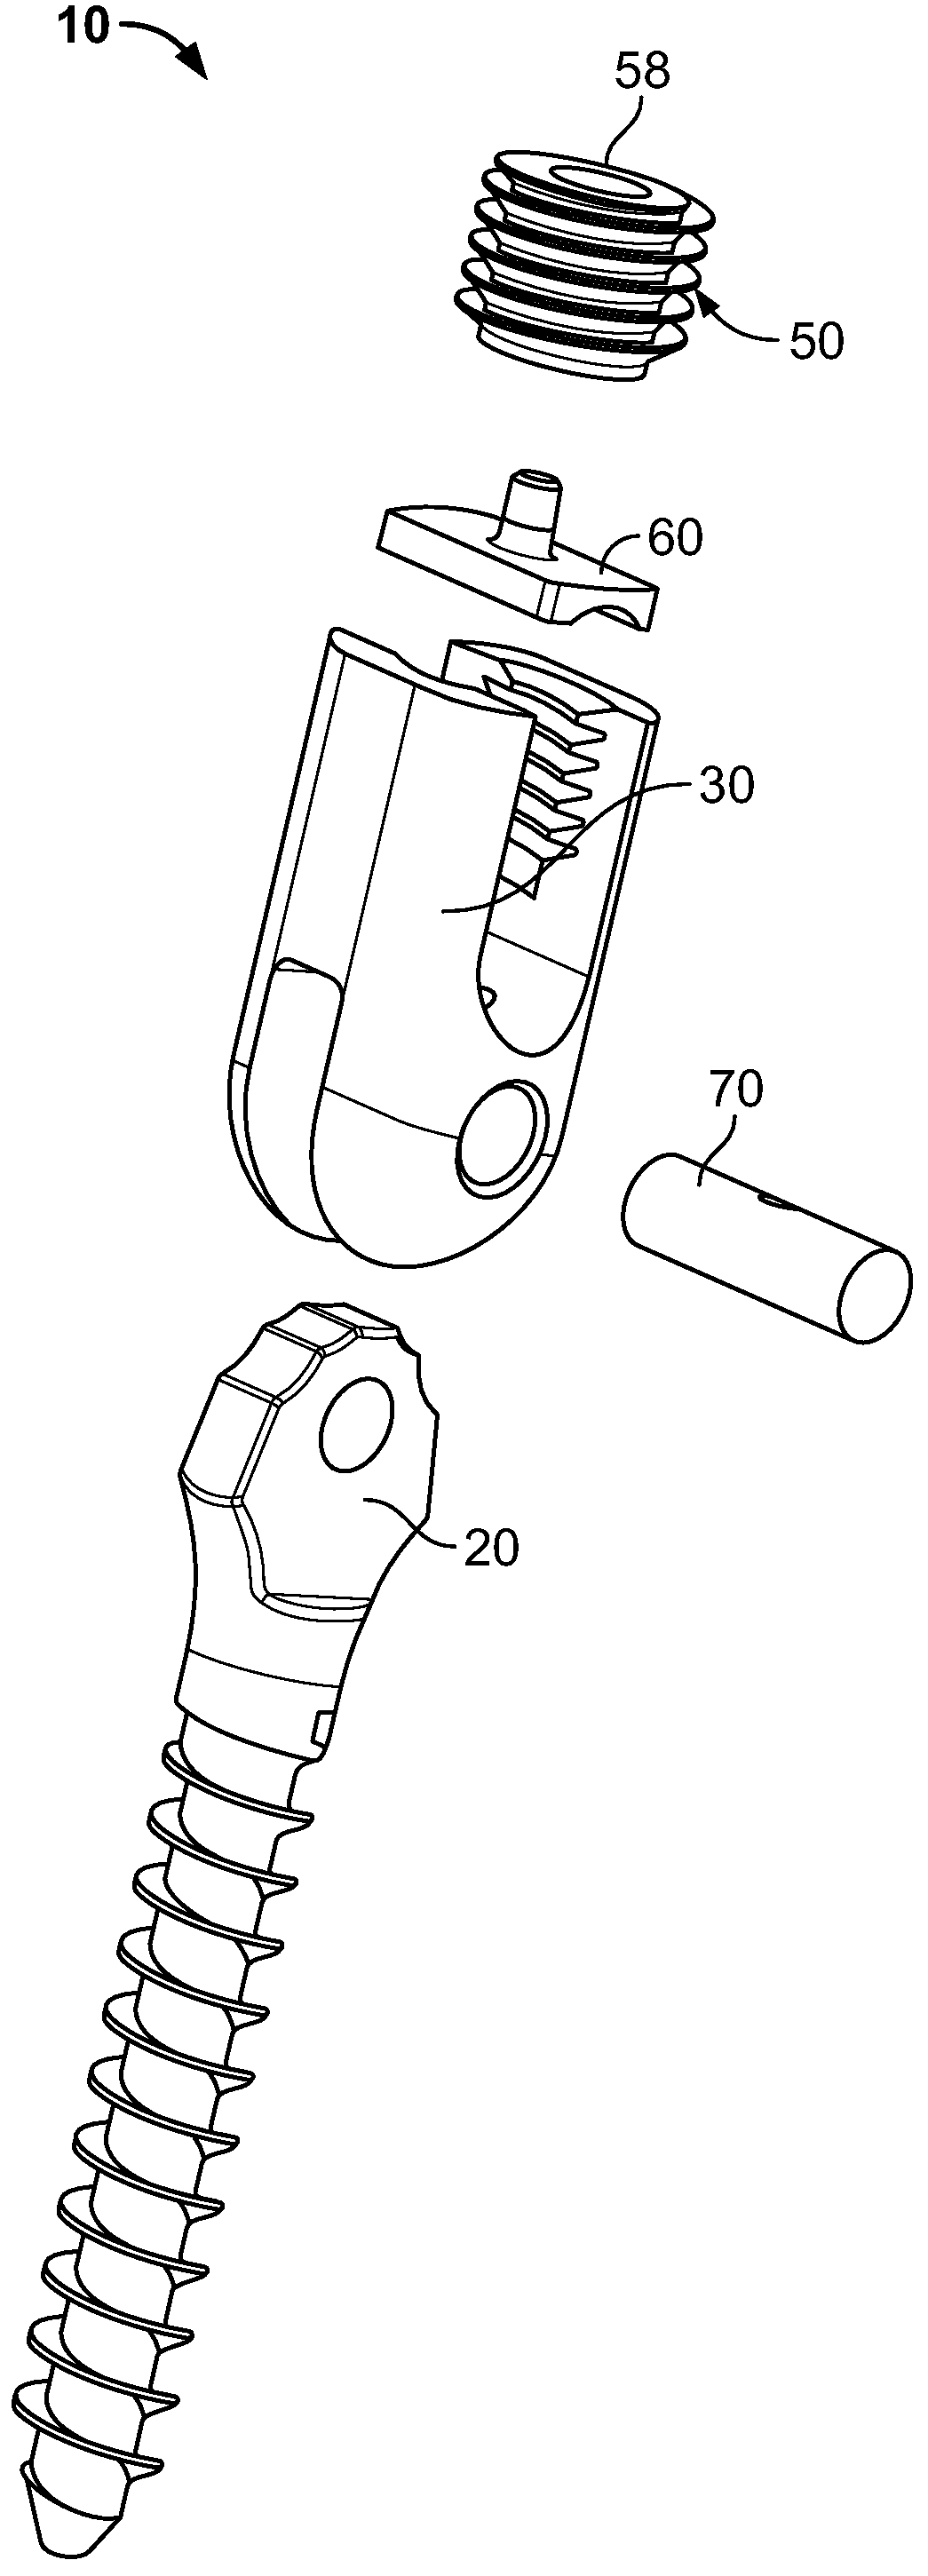 Mono-planar pedicle screw method, system and kit